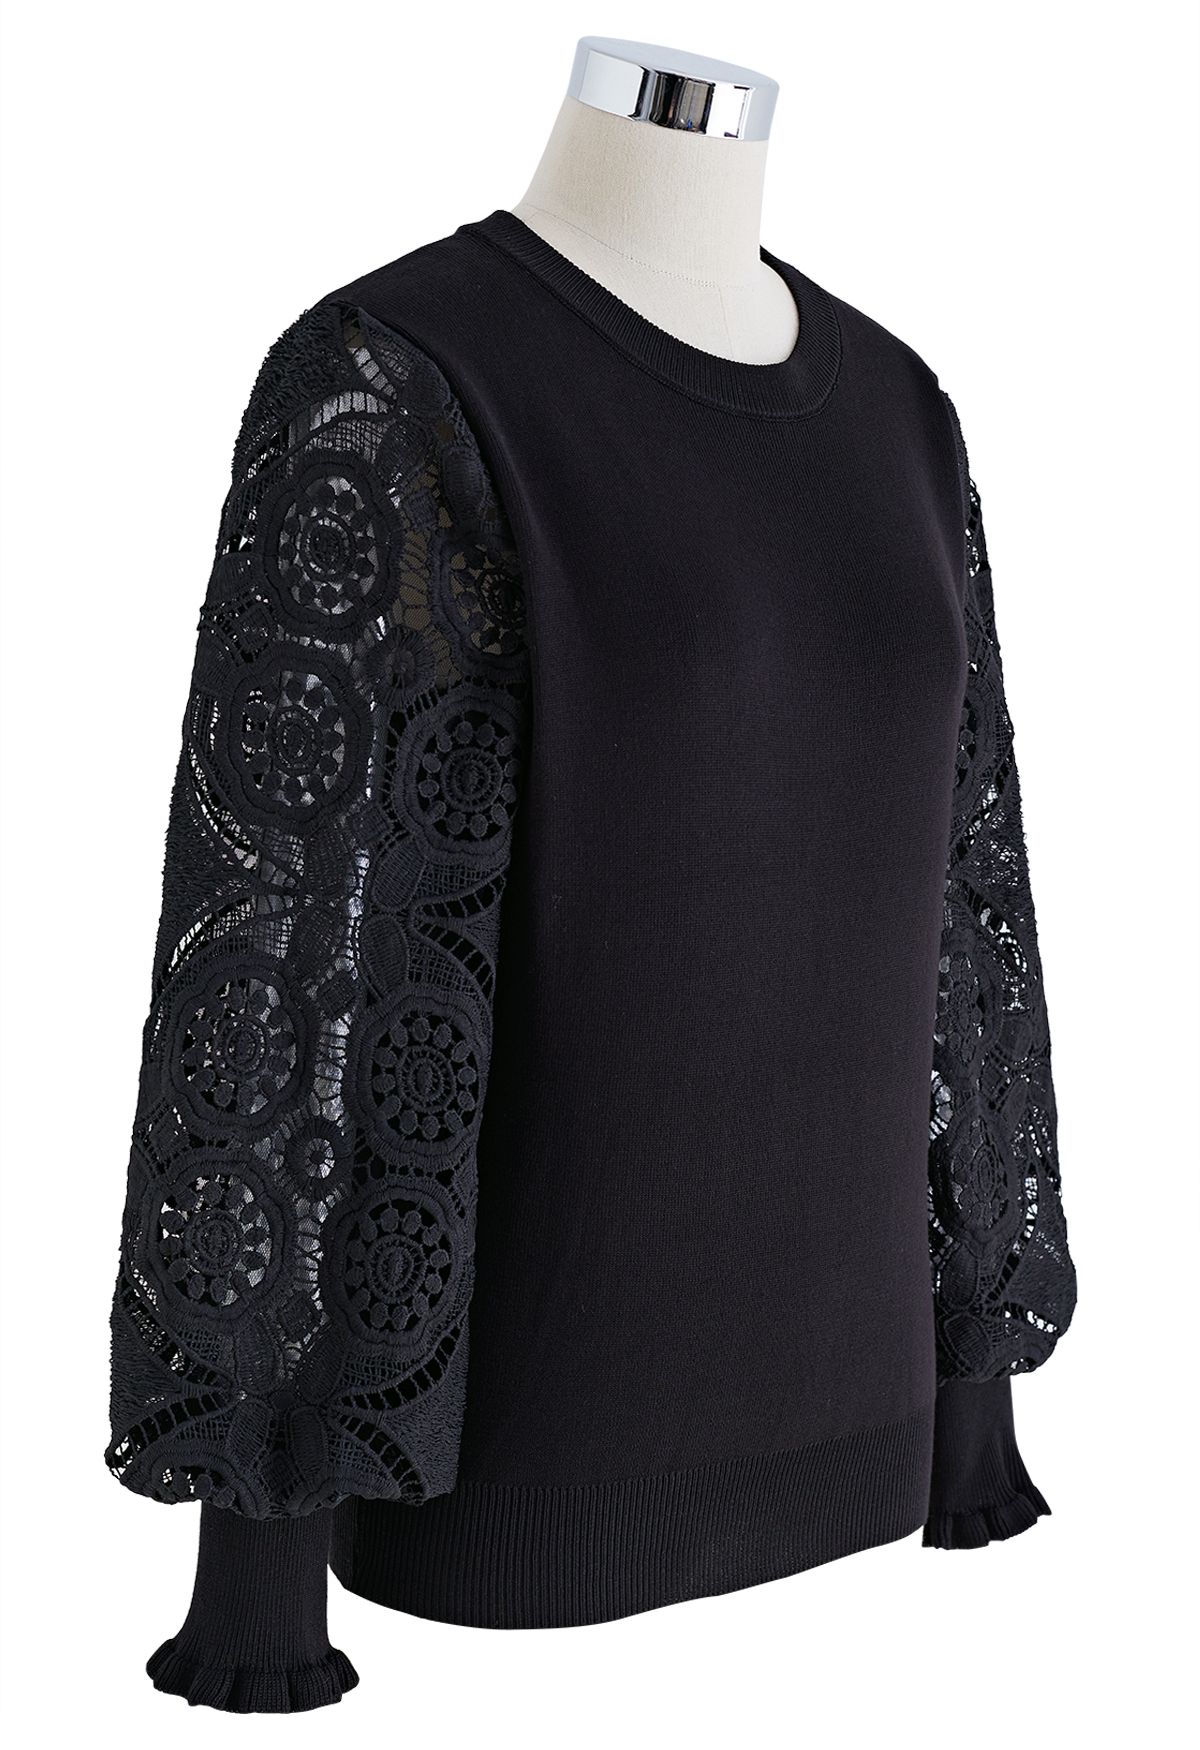 Floral Crochet Sleeve Knit Top in Black